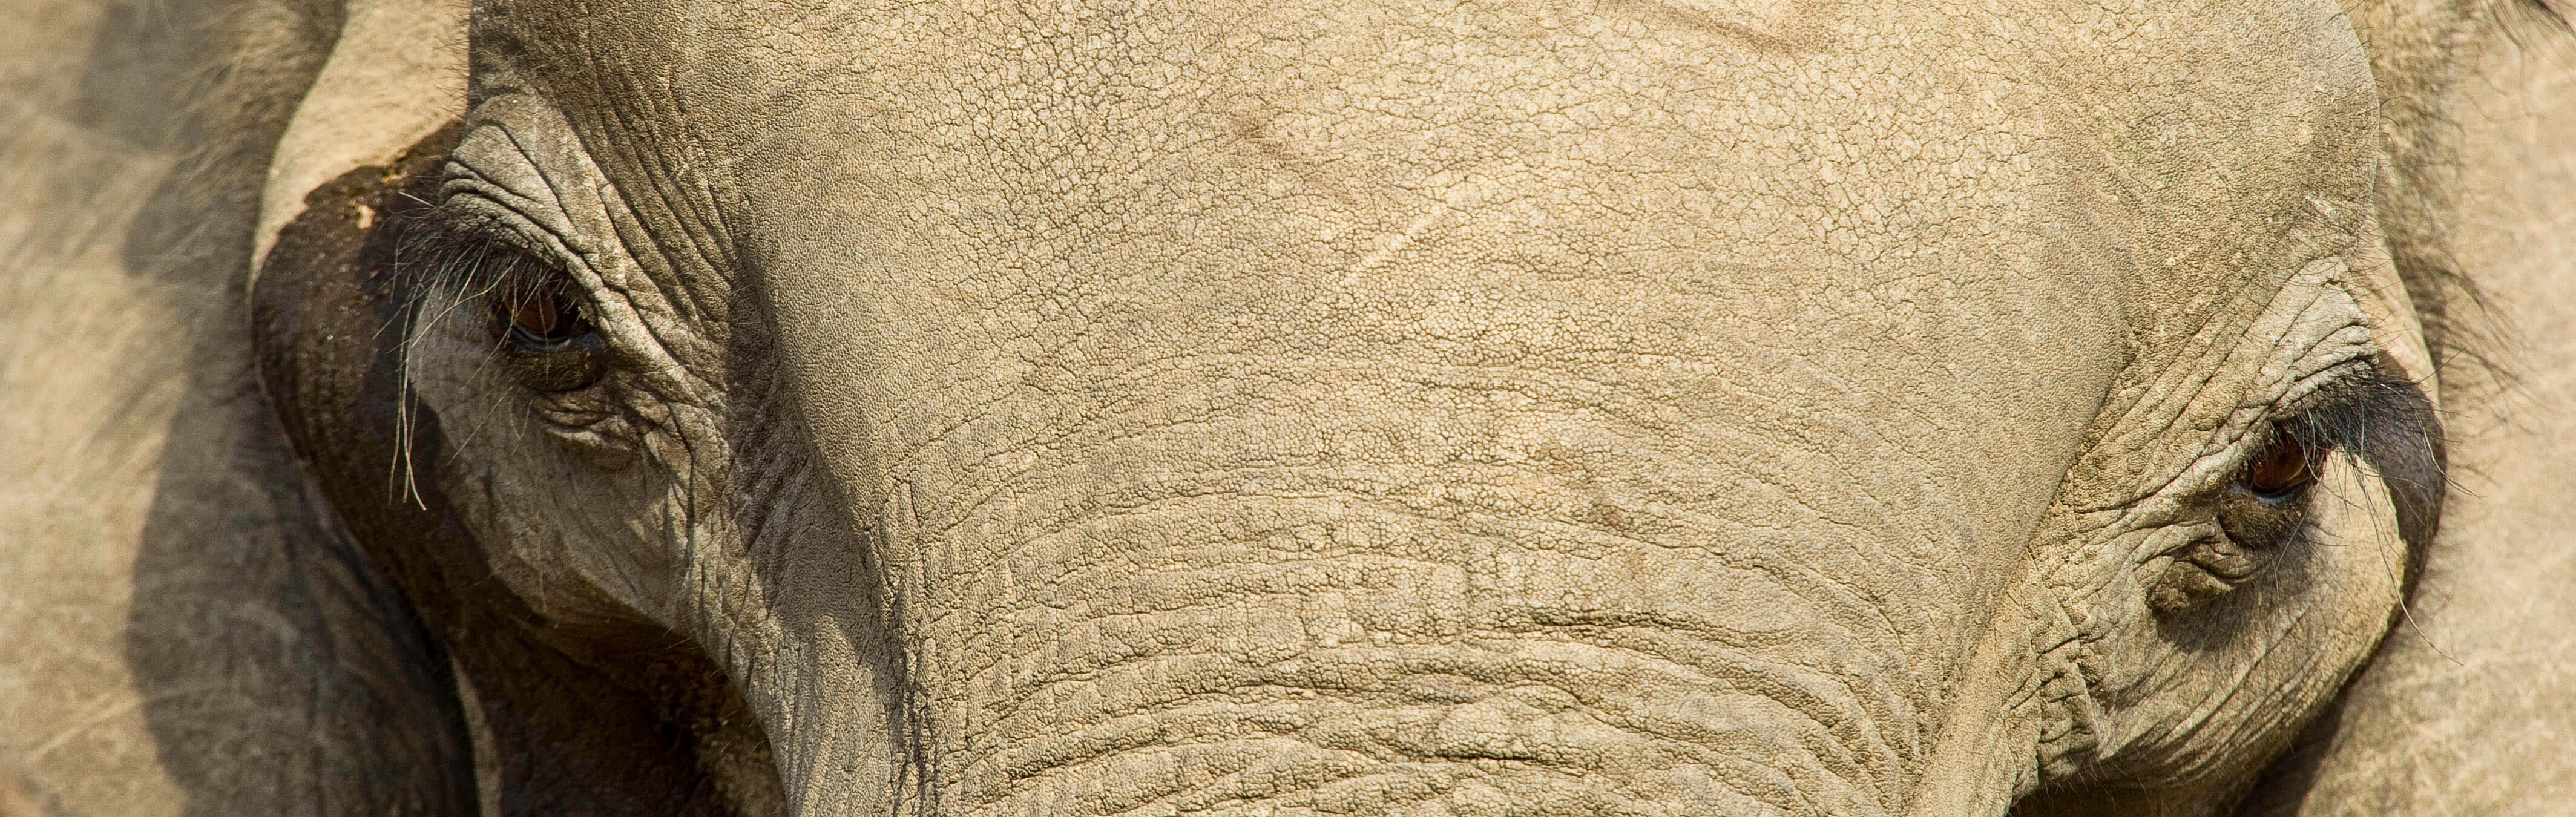 Elephant close up in Zambia, J. Goetz